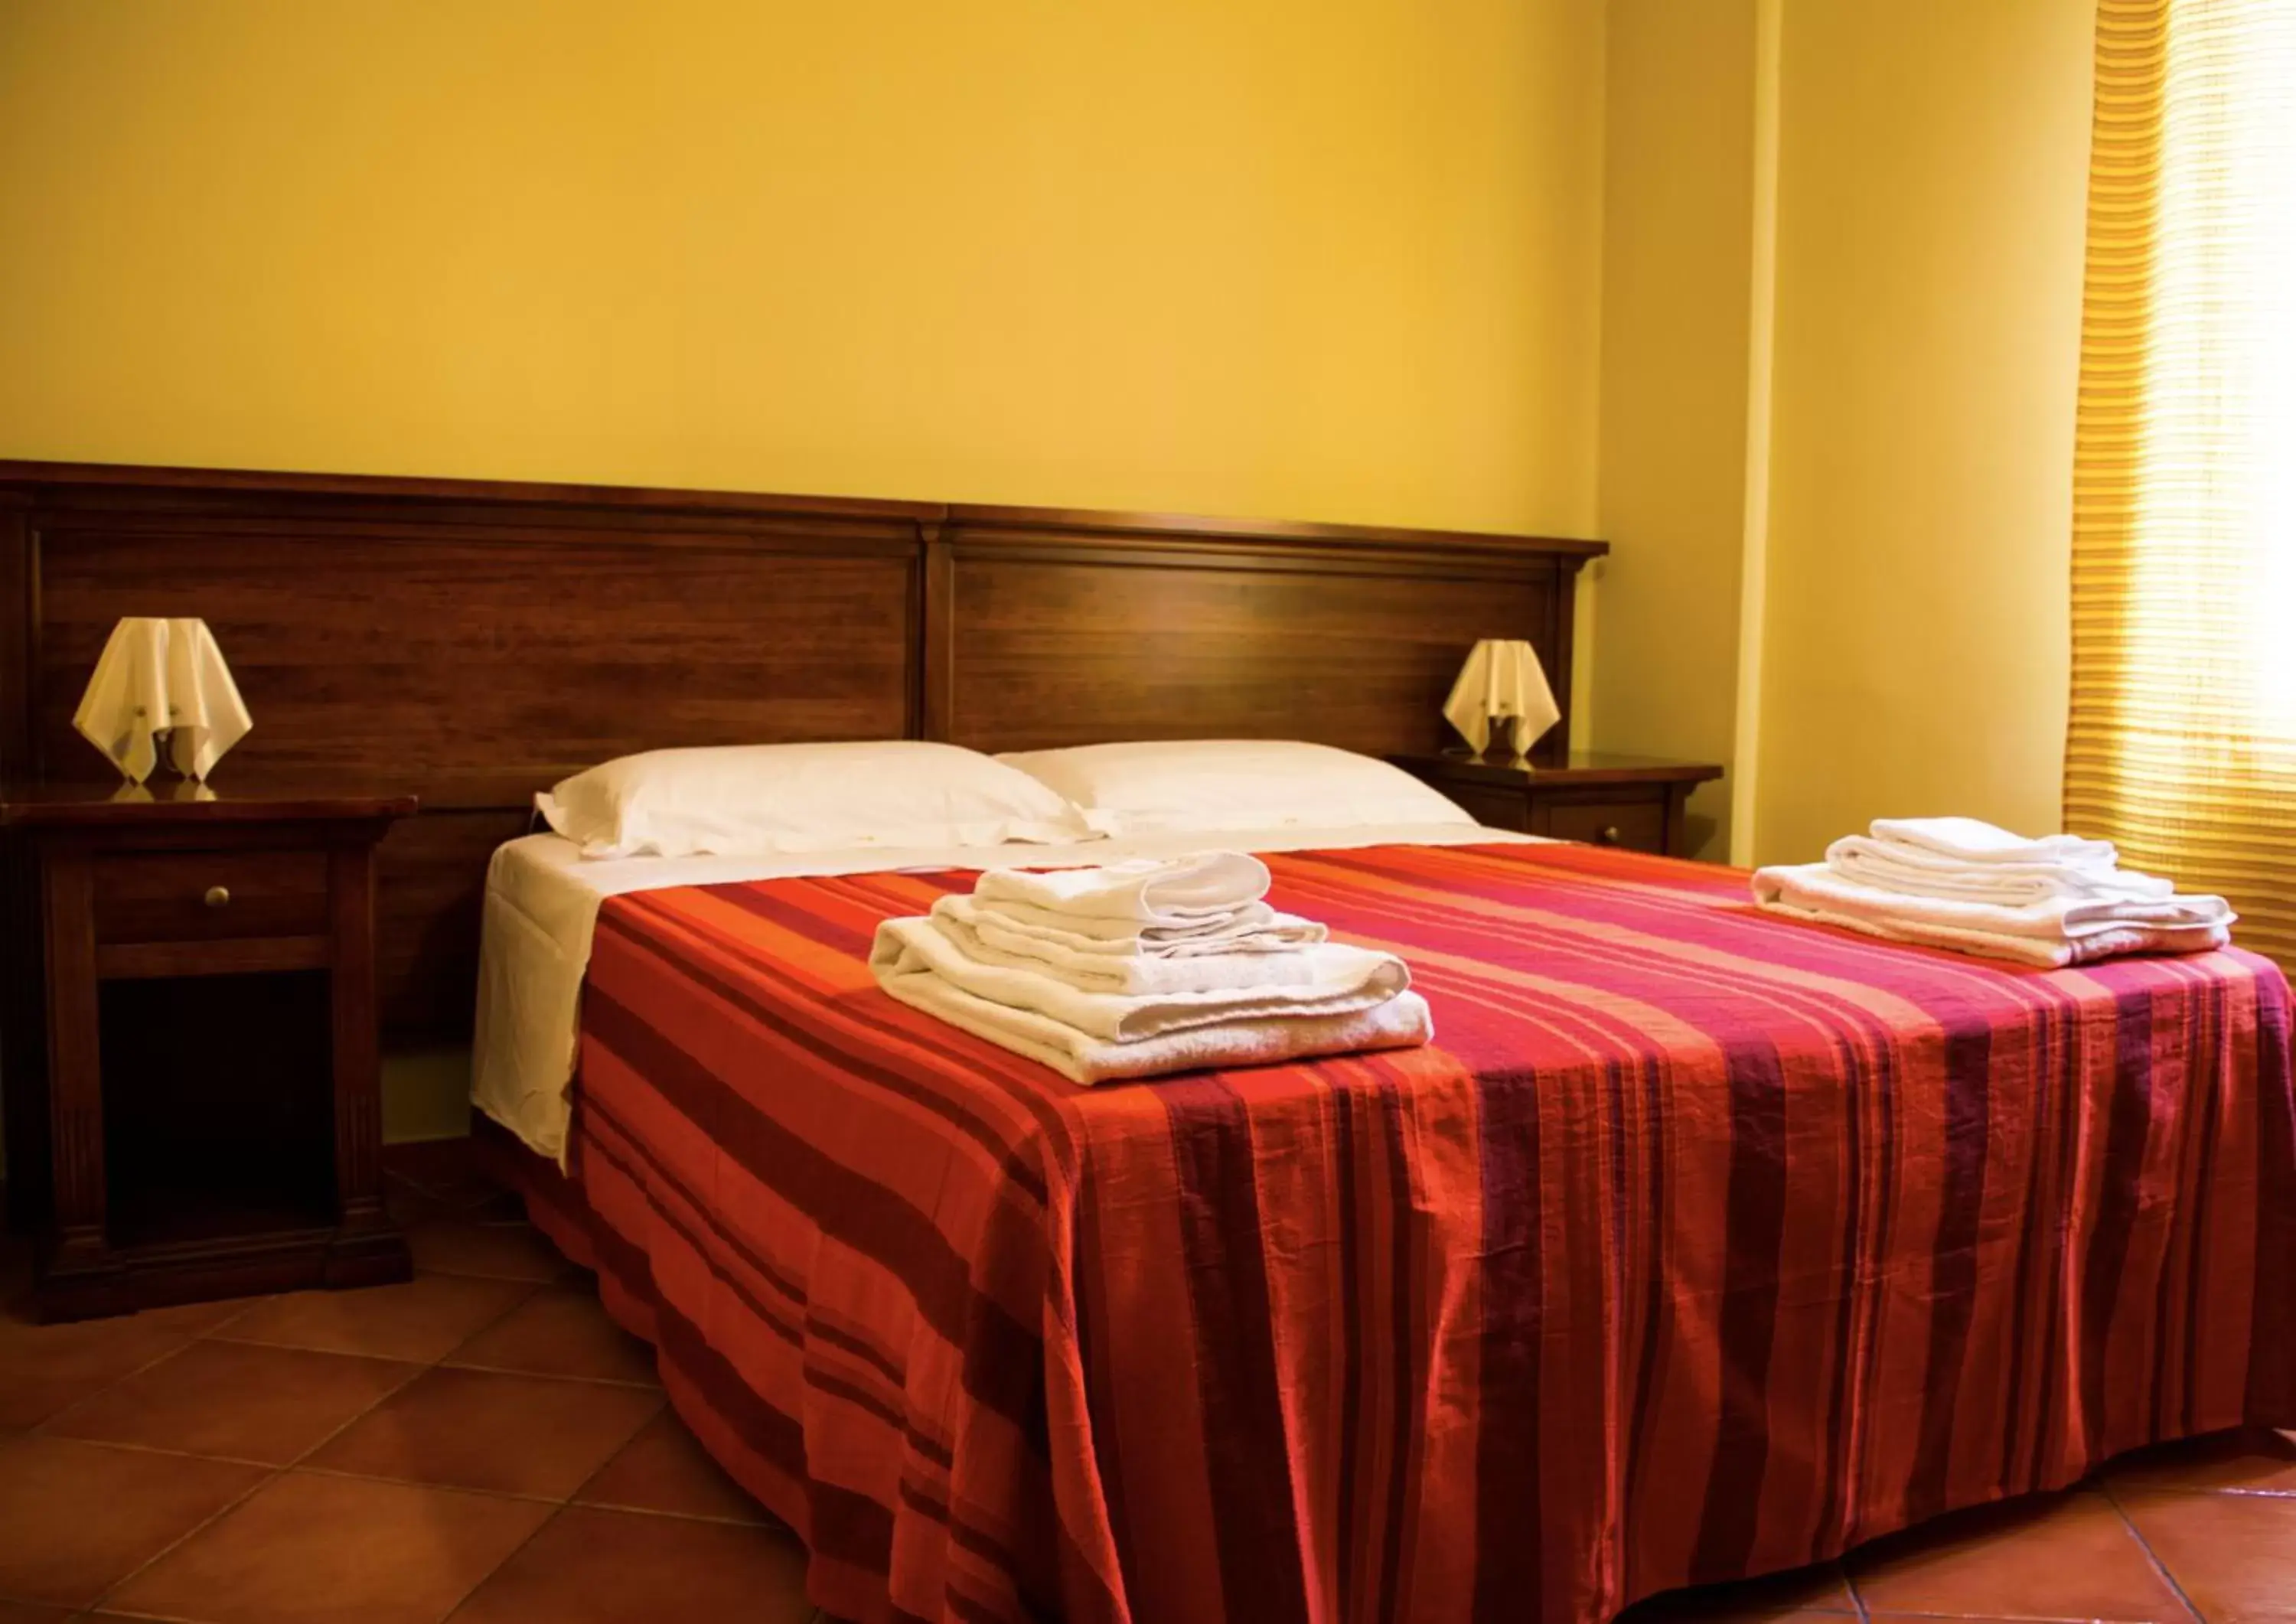 Bed, Room Photo in B&B Porta Bagni